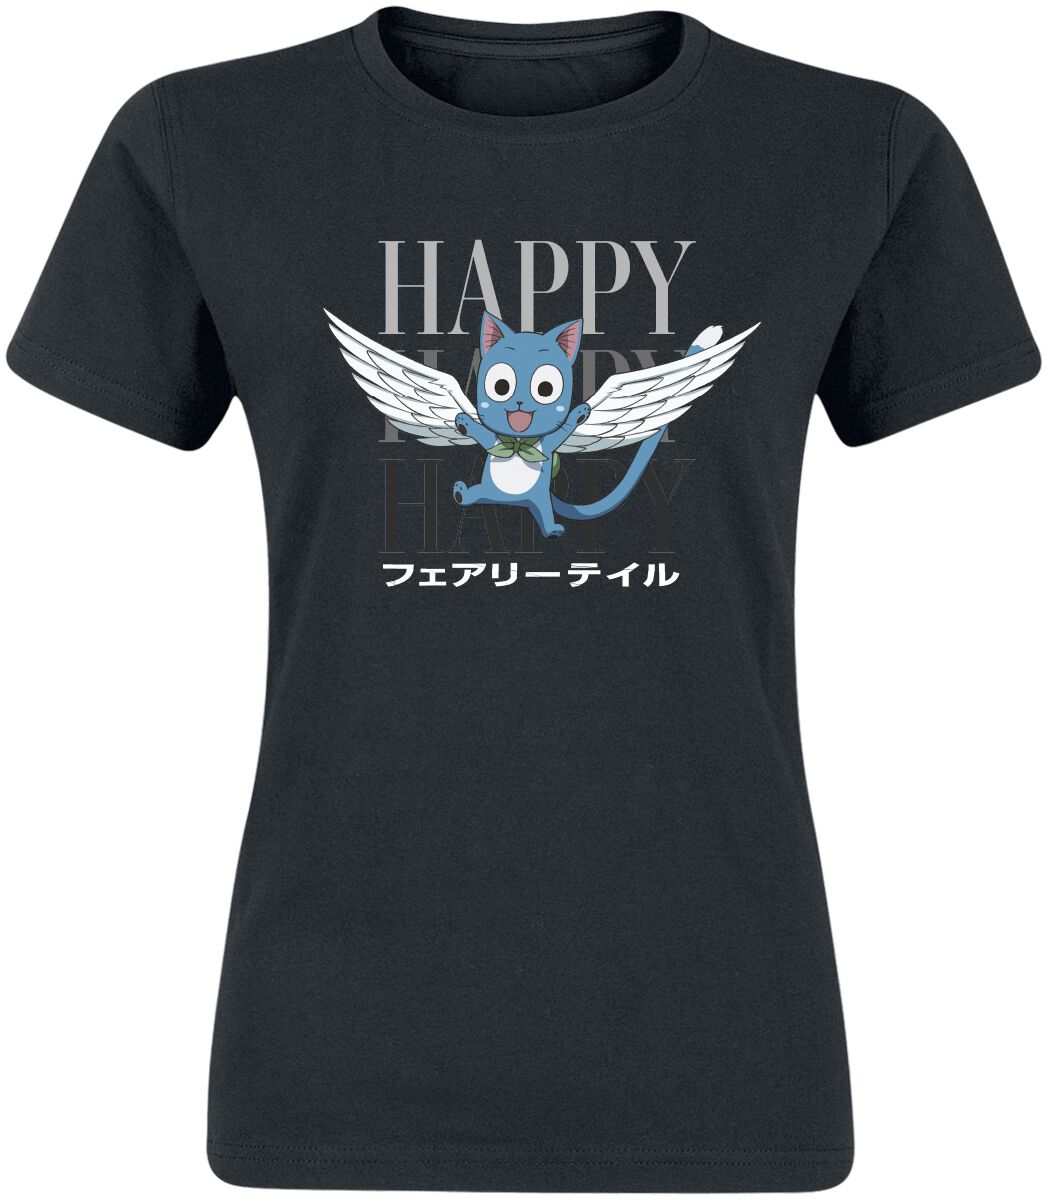 fairy tail - anime t-shirt - happy - s bis xxl - fÃ¼r damen - grÃ¶ÃŸe l - - lizenzierter fanartikel schwarz donna